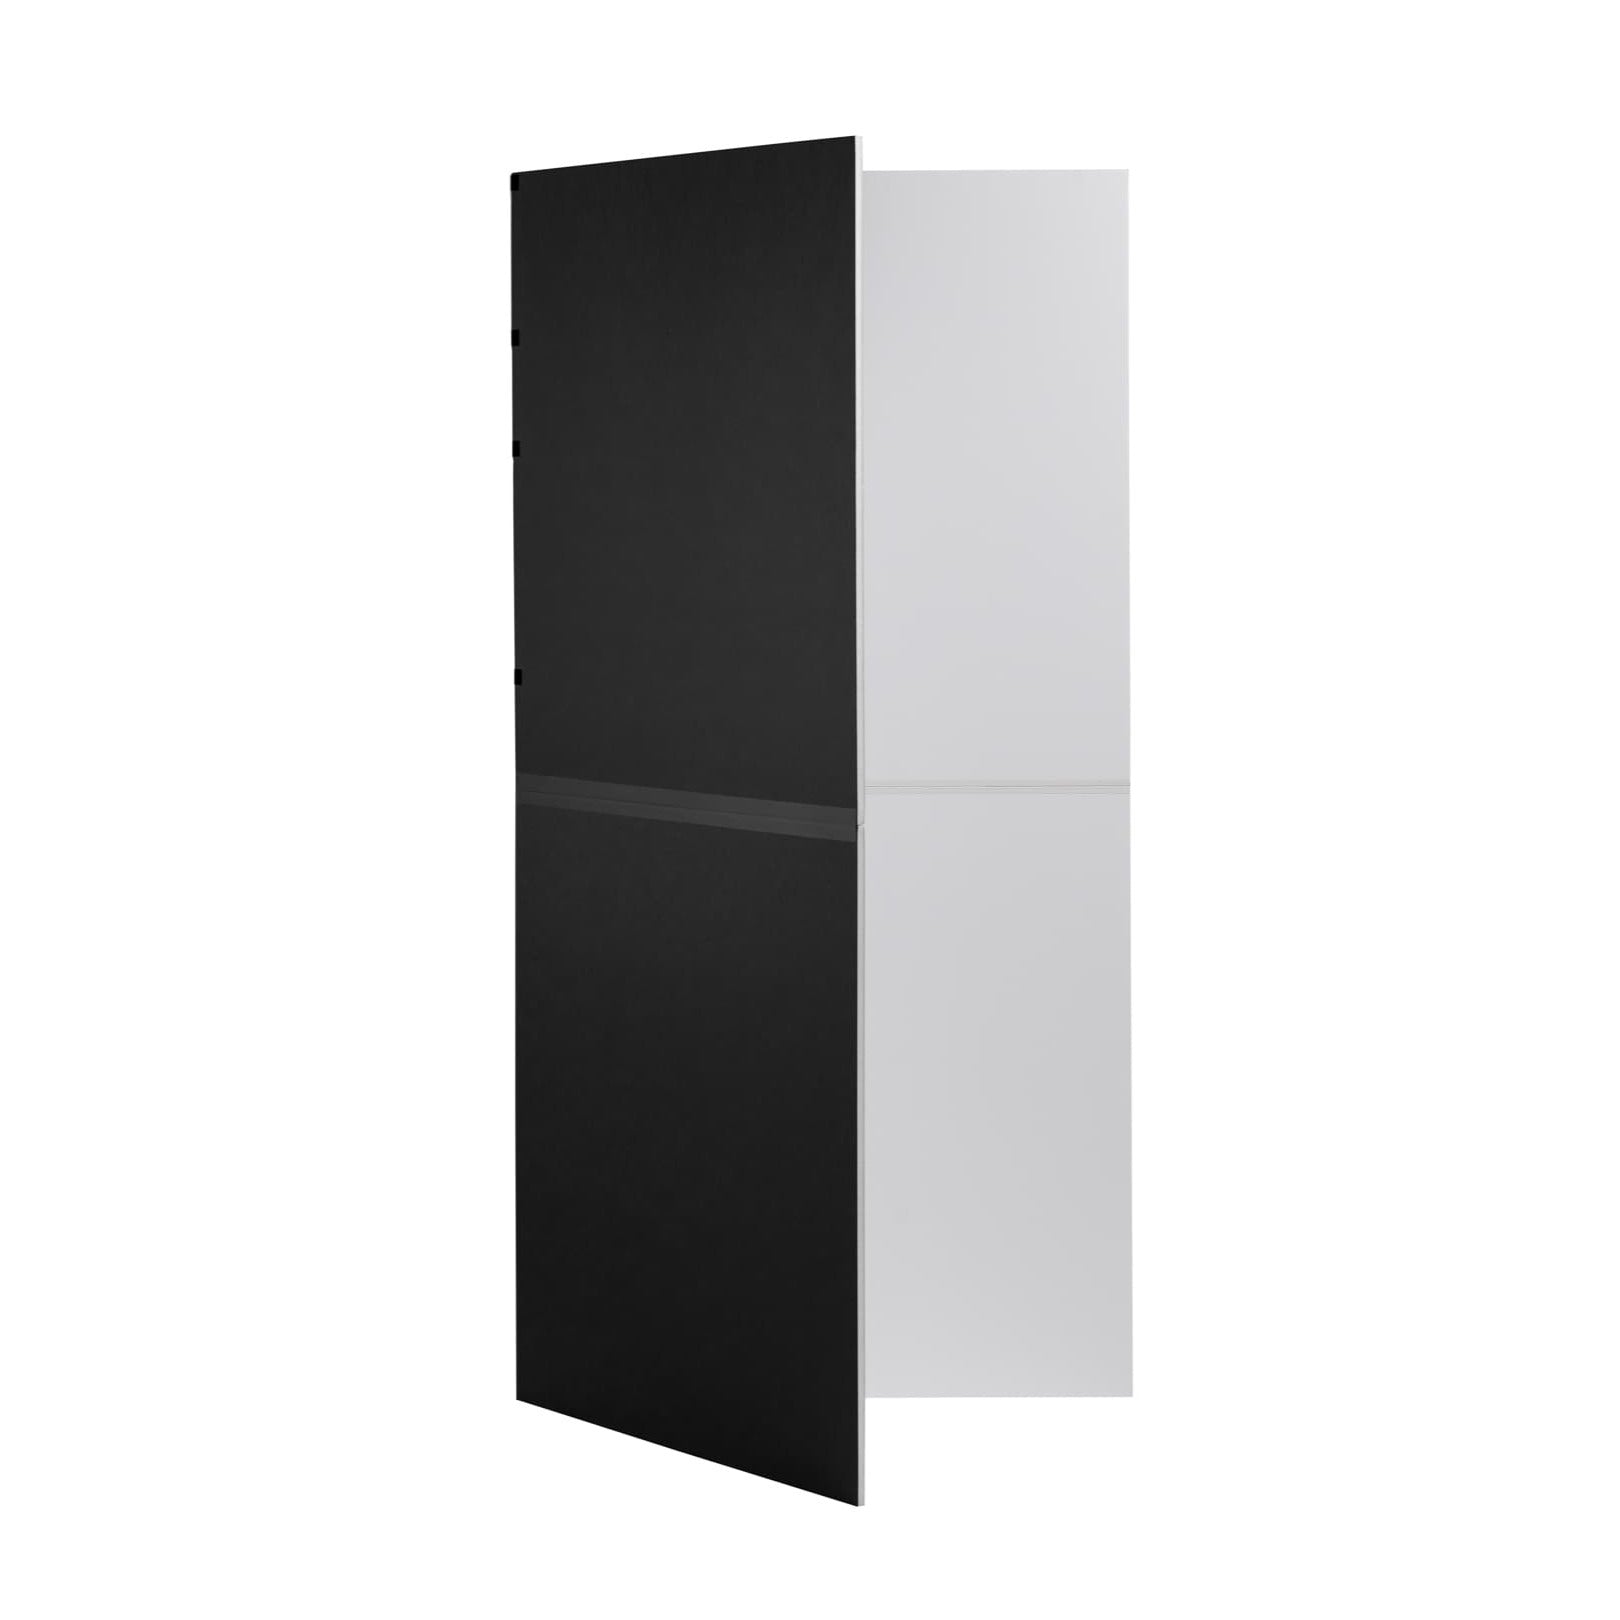 One Side Black One Side White With Black Core Foam Board 48 x 96 x 1/2 8  sheets